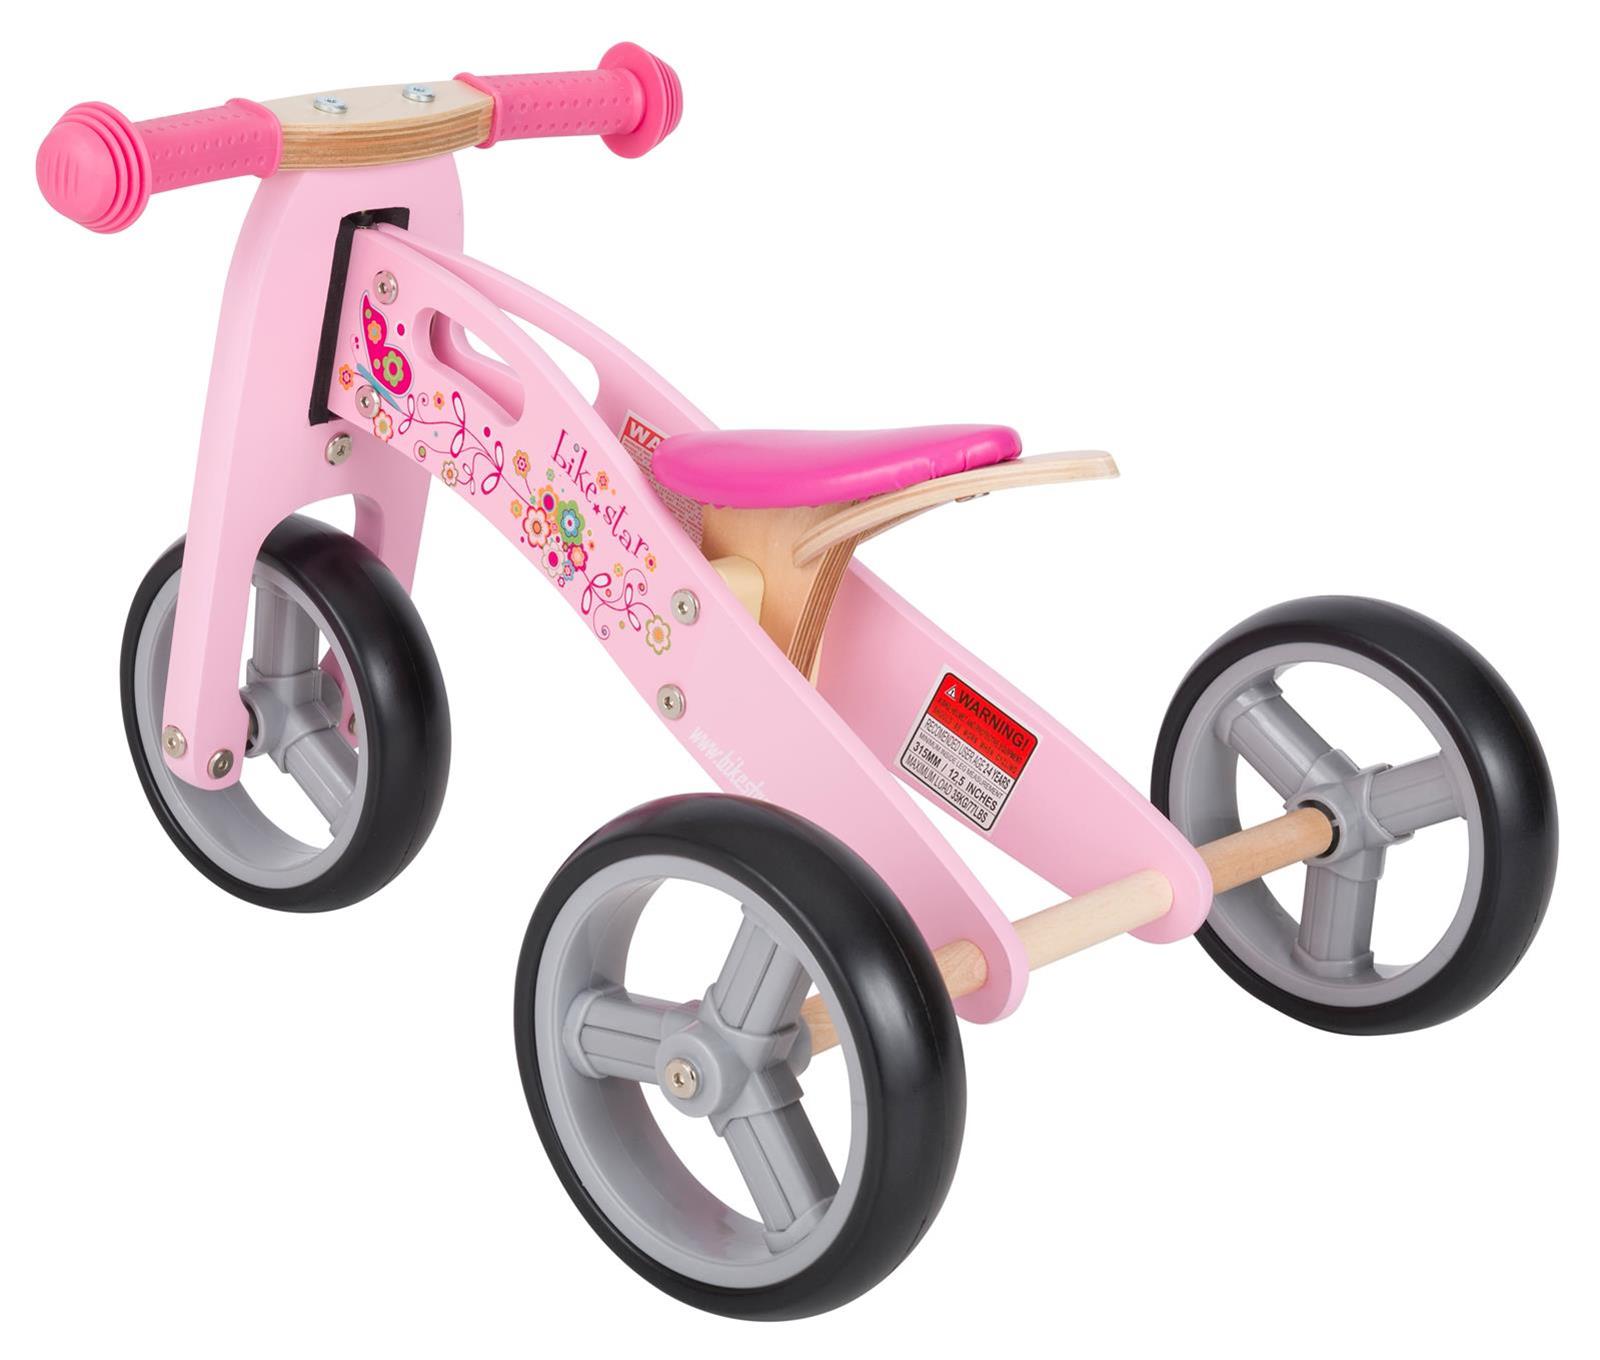 Laufrad Dreirad Kinderlaufrad Lernlaufrad Roller Scooter Fahrrad Bike Pink HOT 